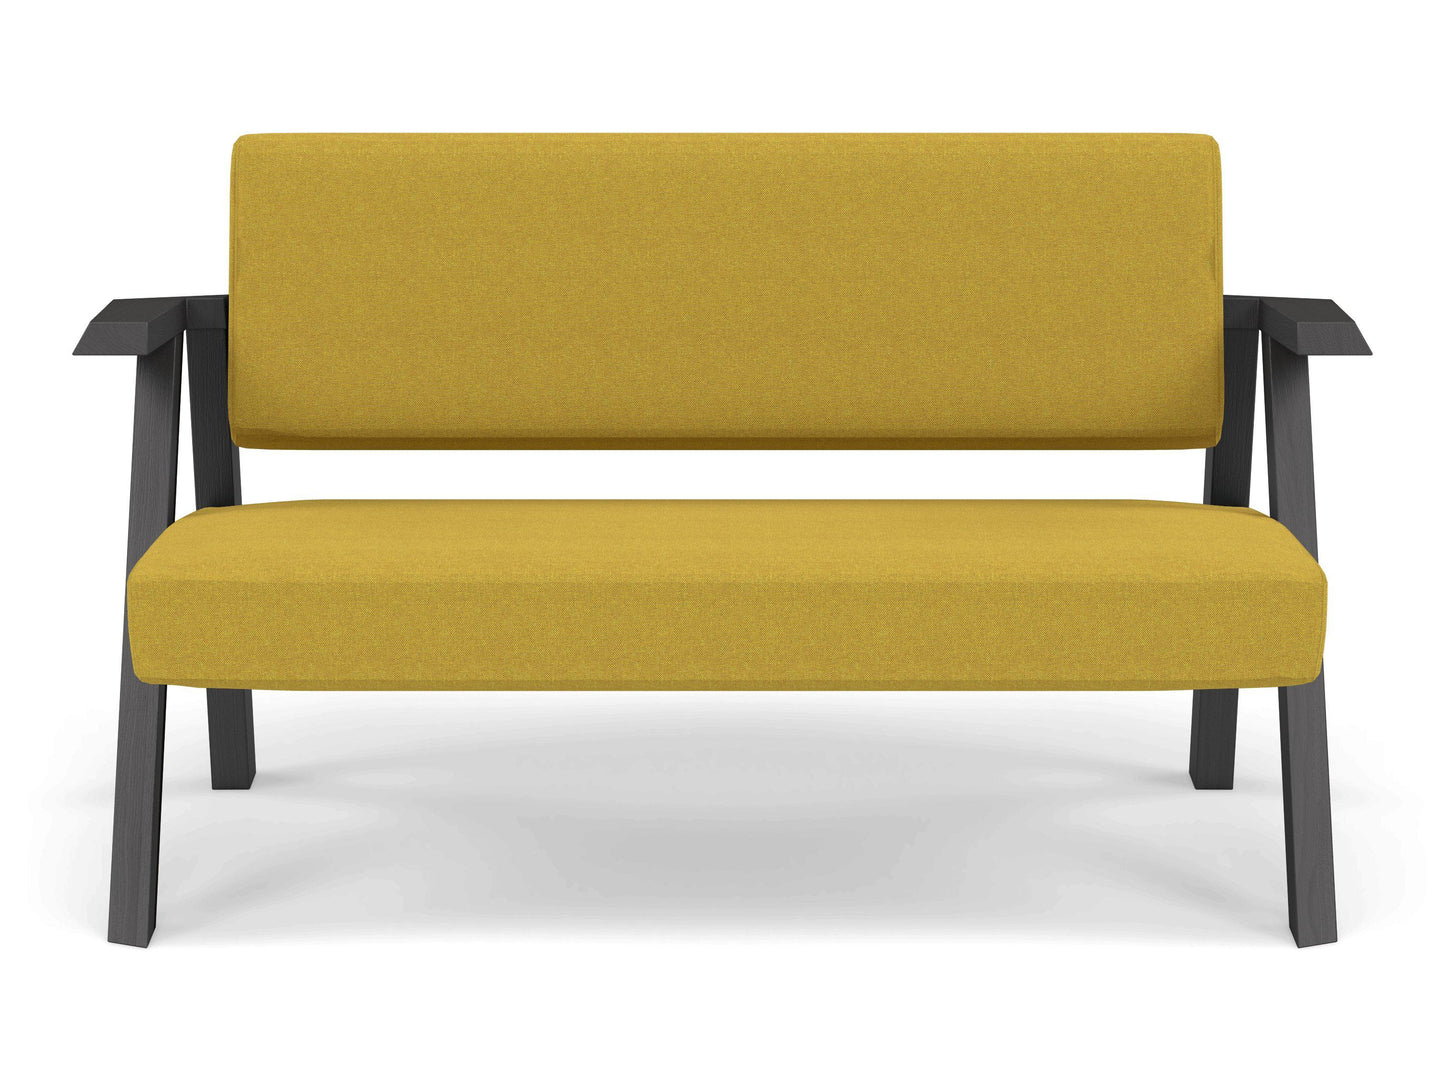 Classic Mid-century Design 2 Seater Sofa Armchair in Mustard Yellow Fabric-Wenge Oak-Distinct Designs (London) Ltd